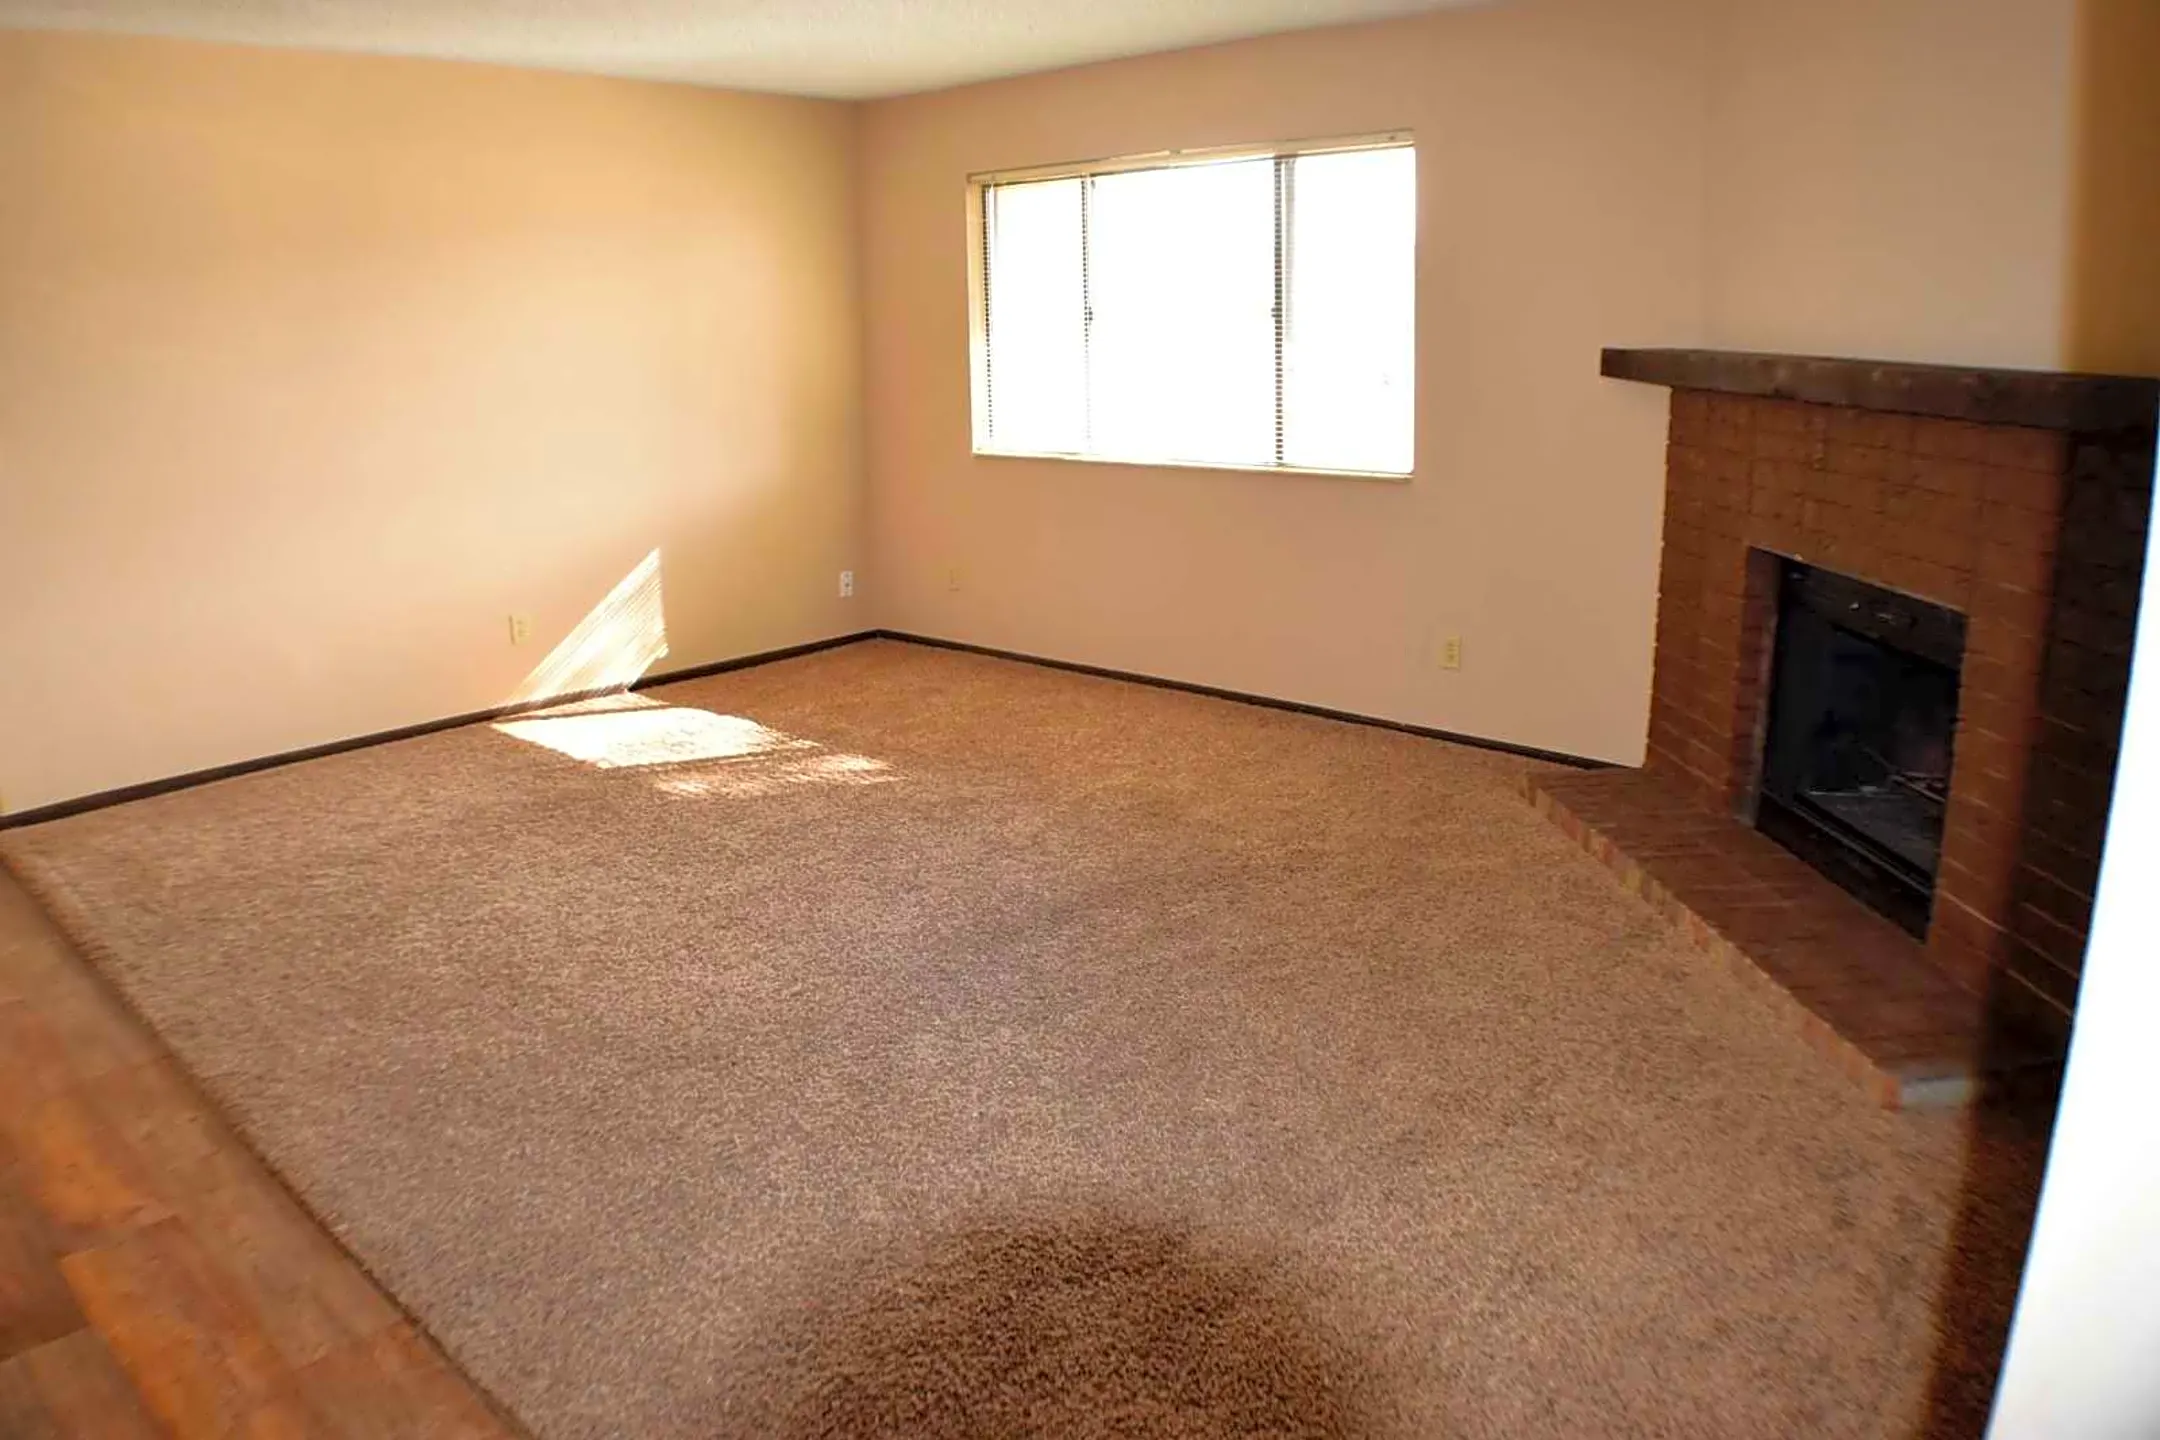 Living Room - The Aragon Apartments - Wichita, KS